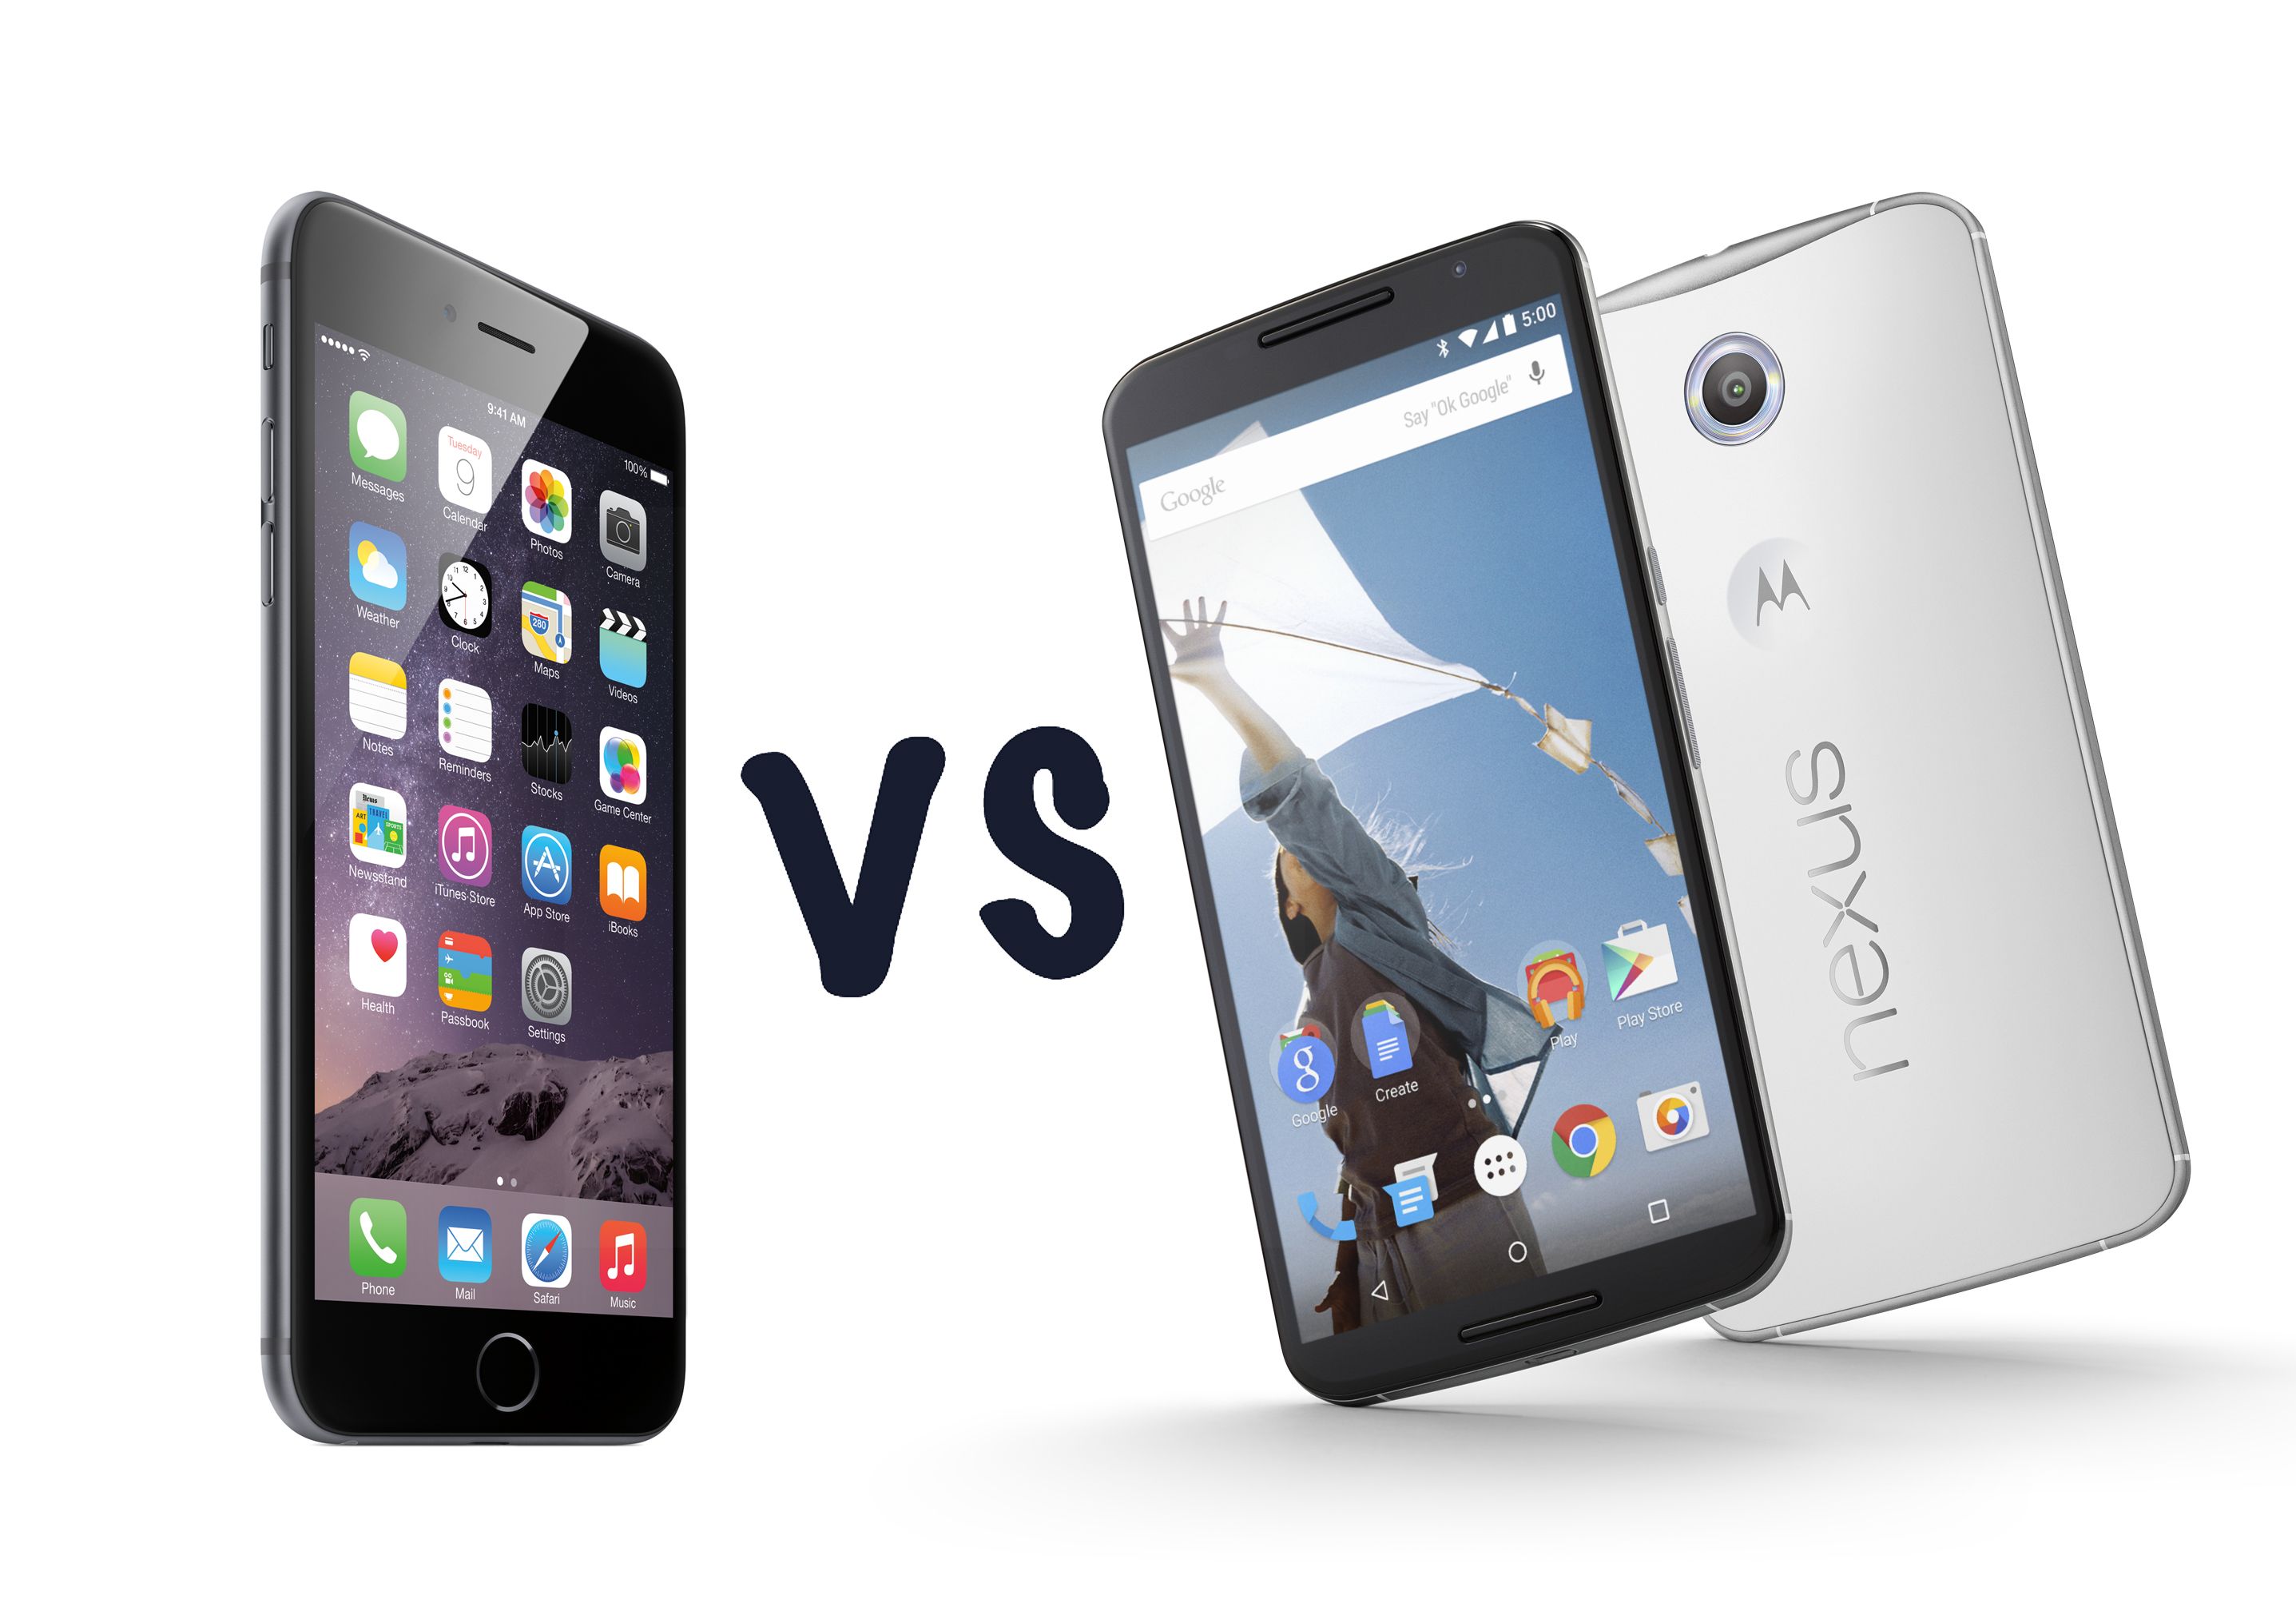 nexus 6 vs iphone 6 plus battle of the big phones image 1